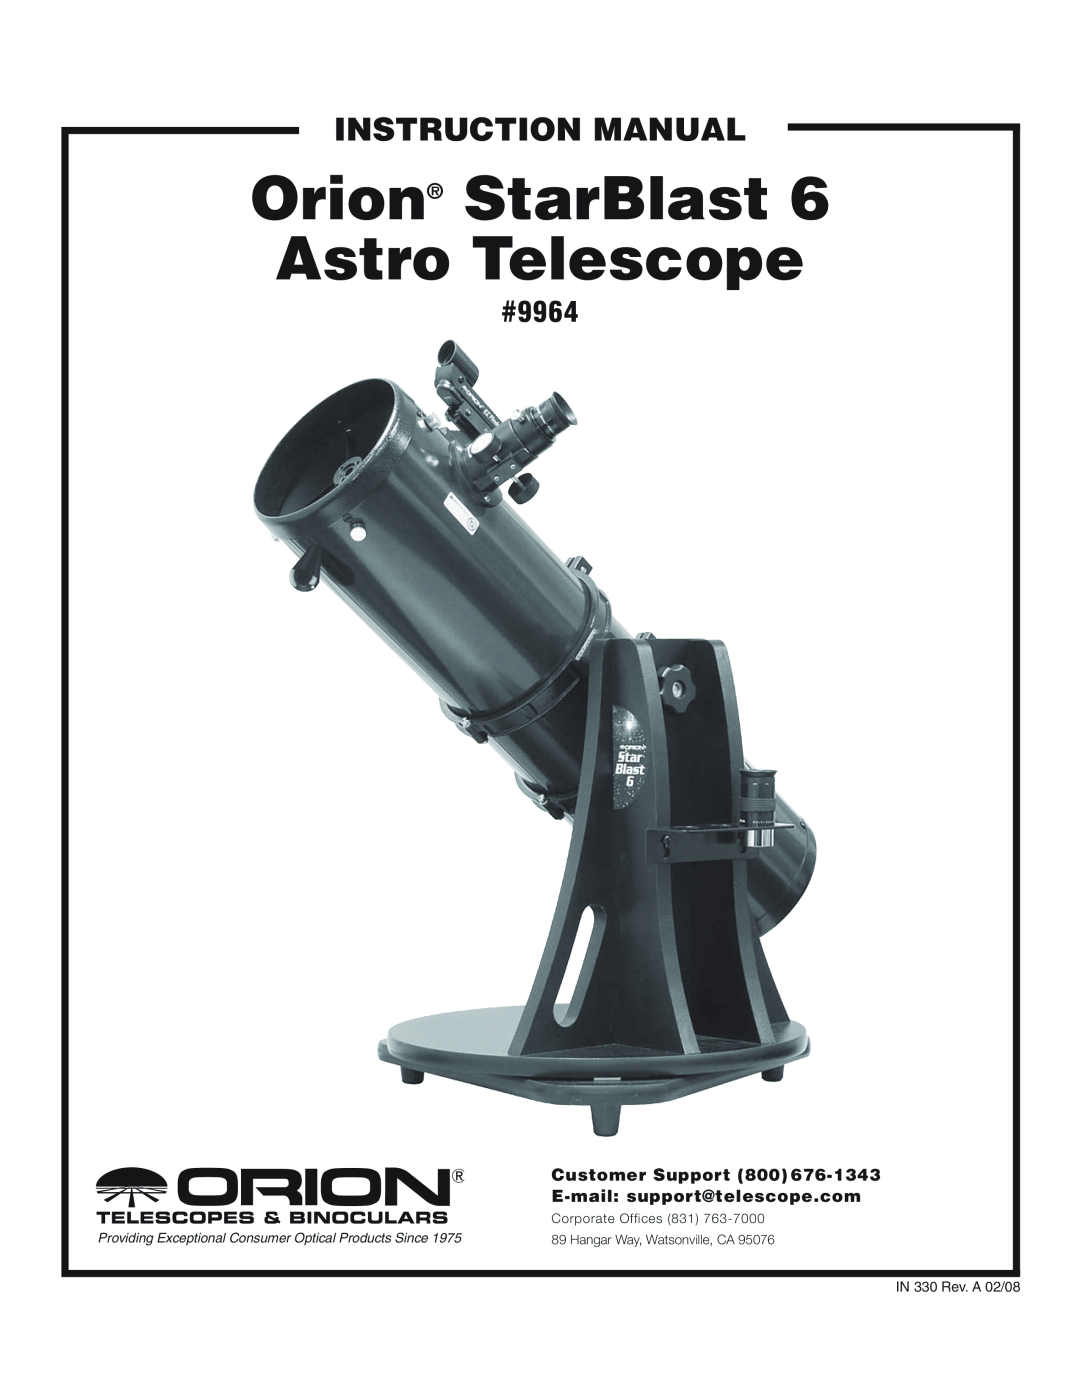 Orion instruction manual Customer Support, E-mail support@telescope.com, Orion, StarBlast, Astro Telescope, #9964 